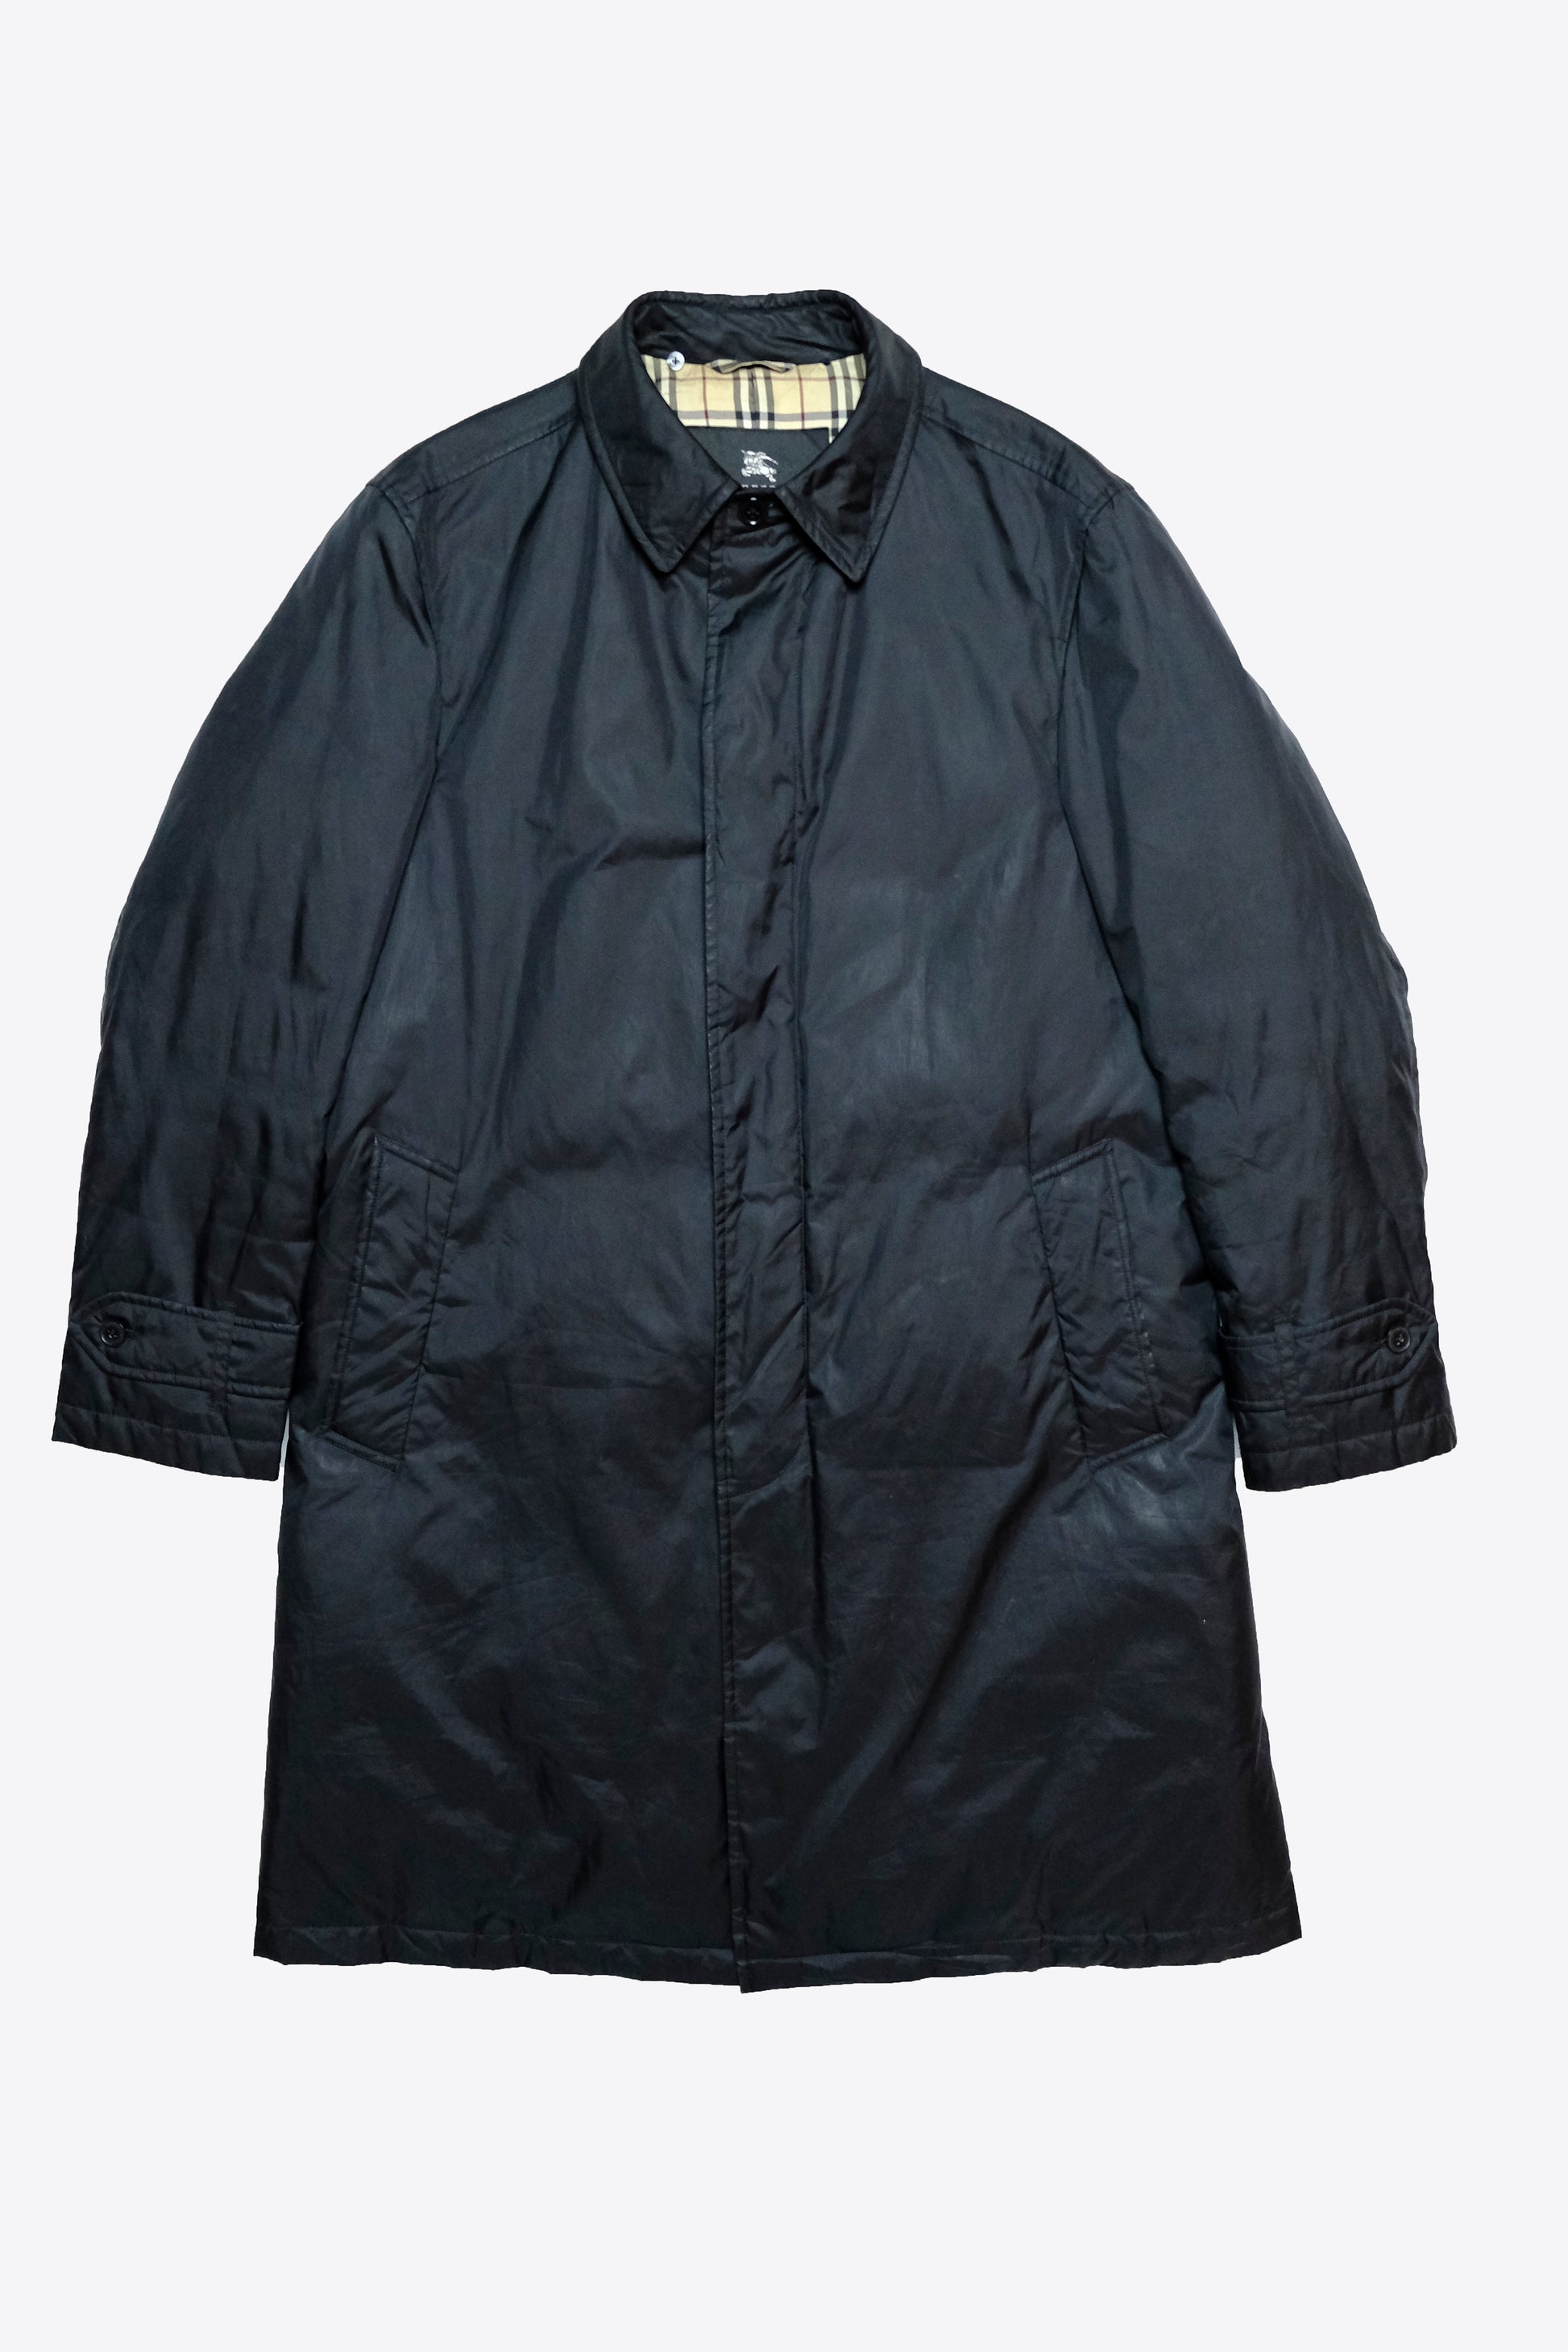 Burberry - Black Label Nova Check Long Coat, Size L